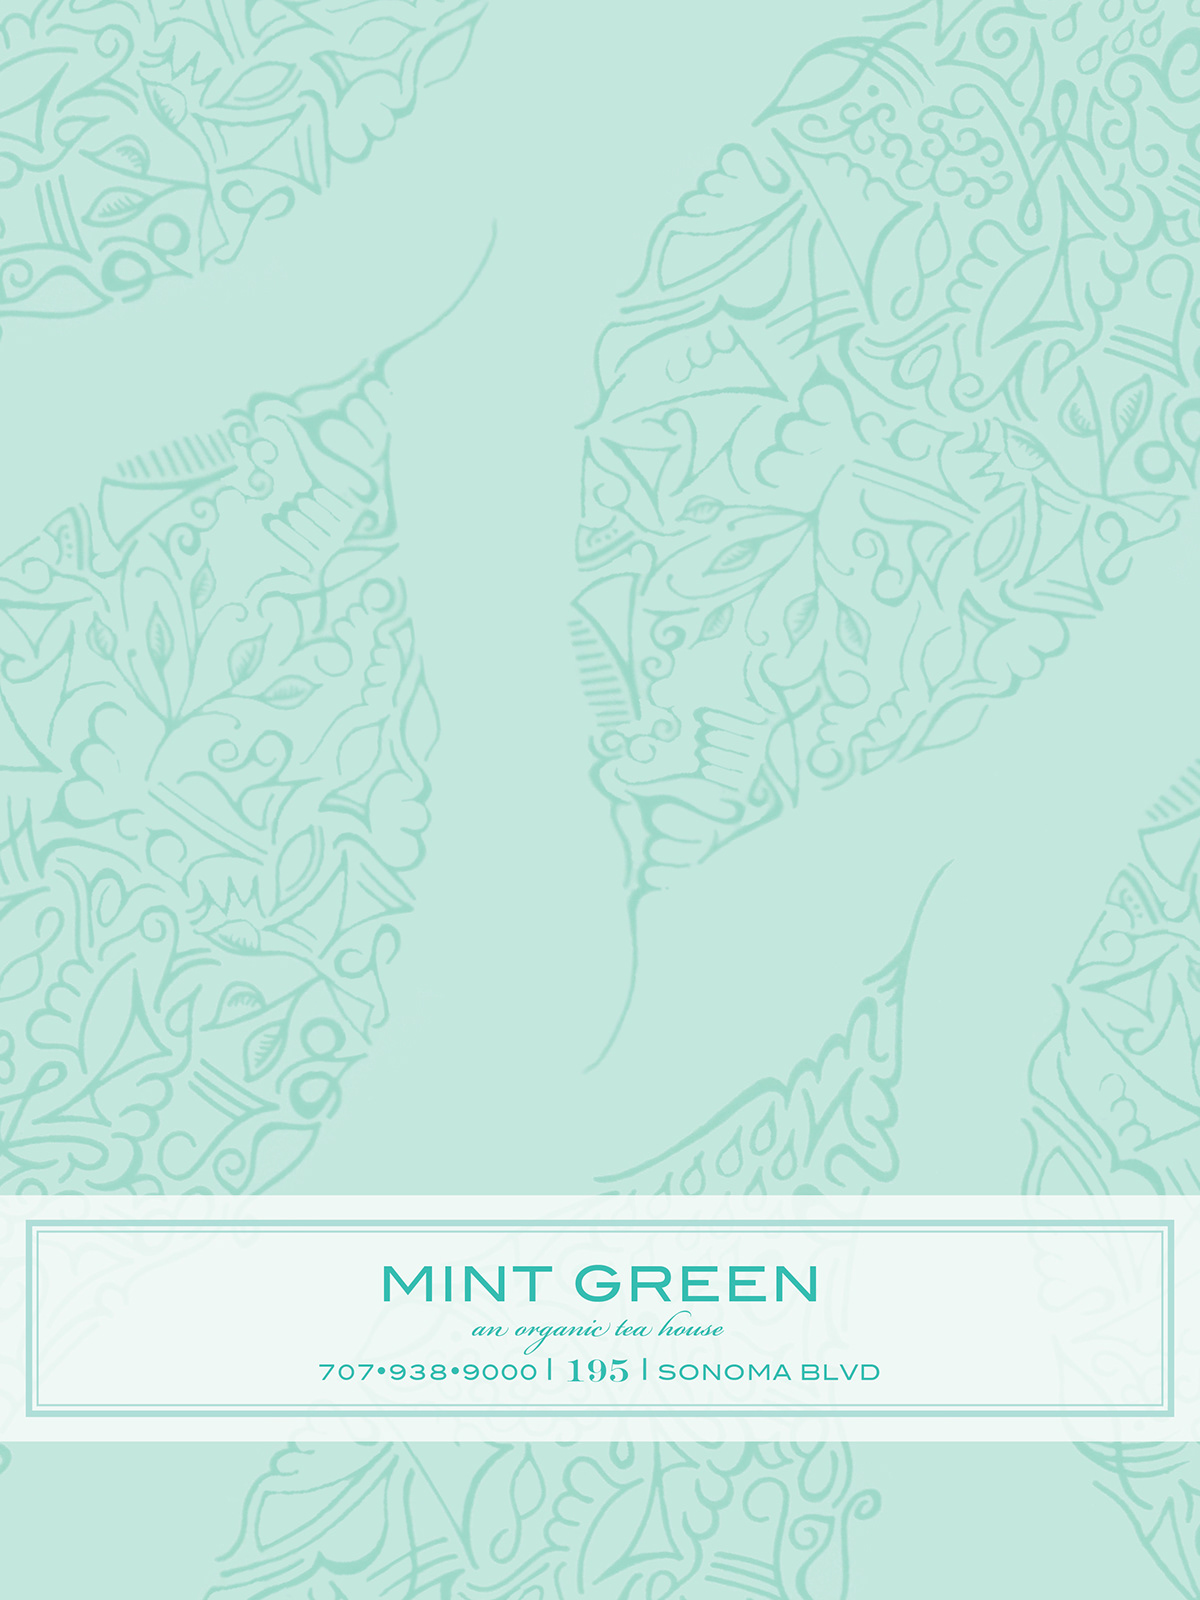 menu restaurant mint green organic tea Illustrator